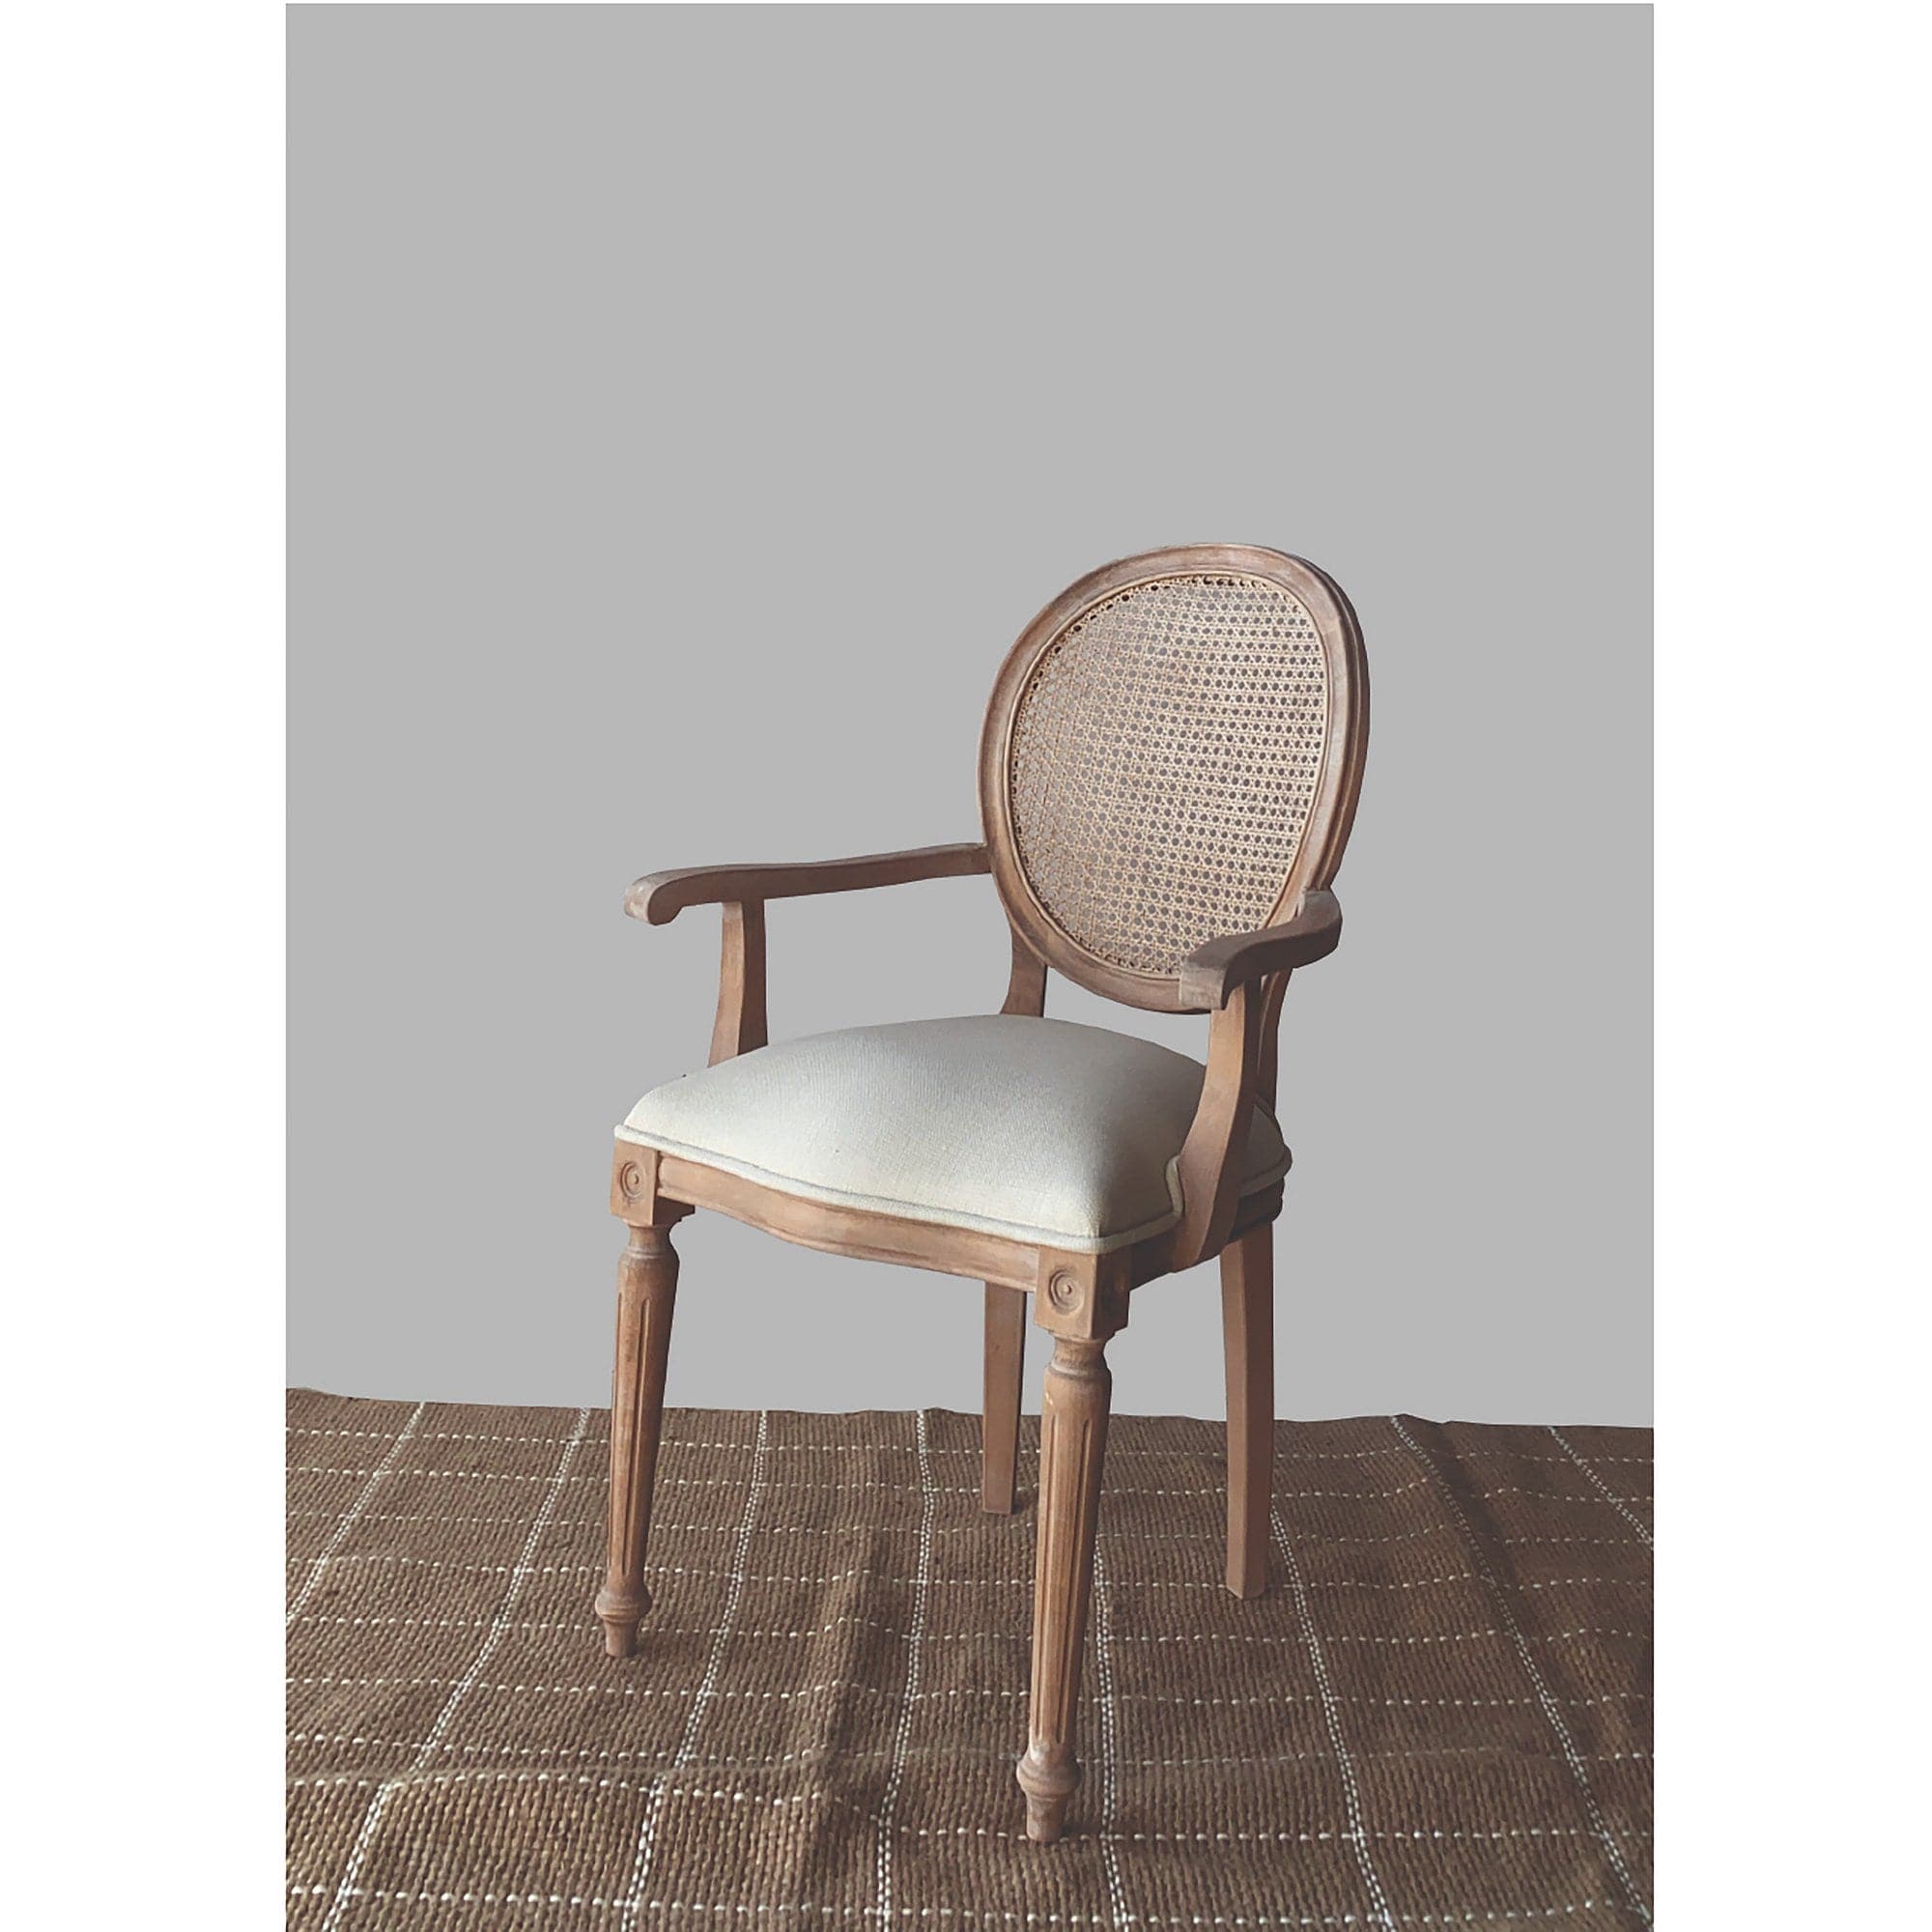 Scaun tapitat cu stofa si picioare din lemn, Albero 76 Ivoir / Natural Antichizat, l50xA50xH96 cm